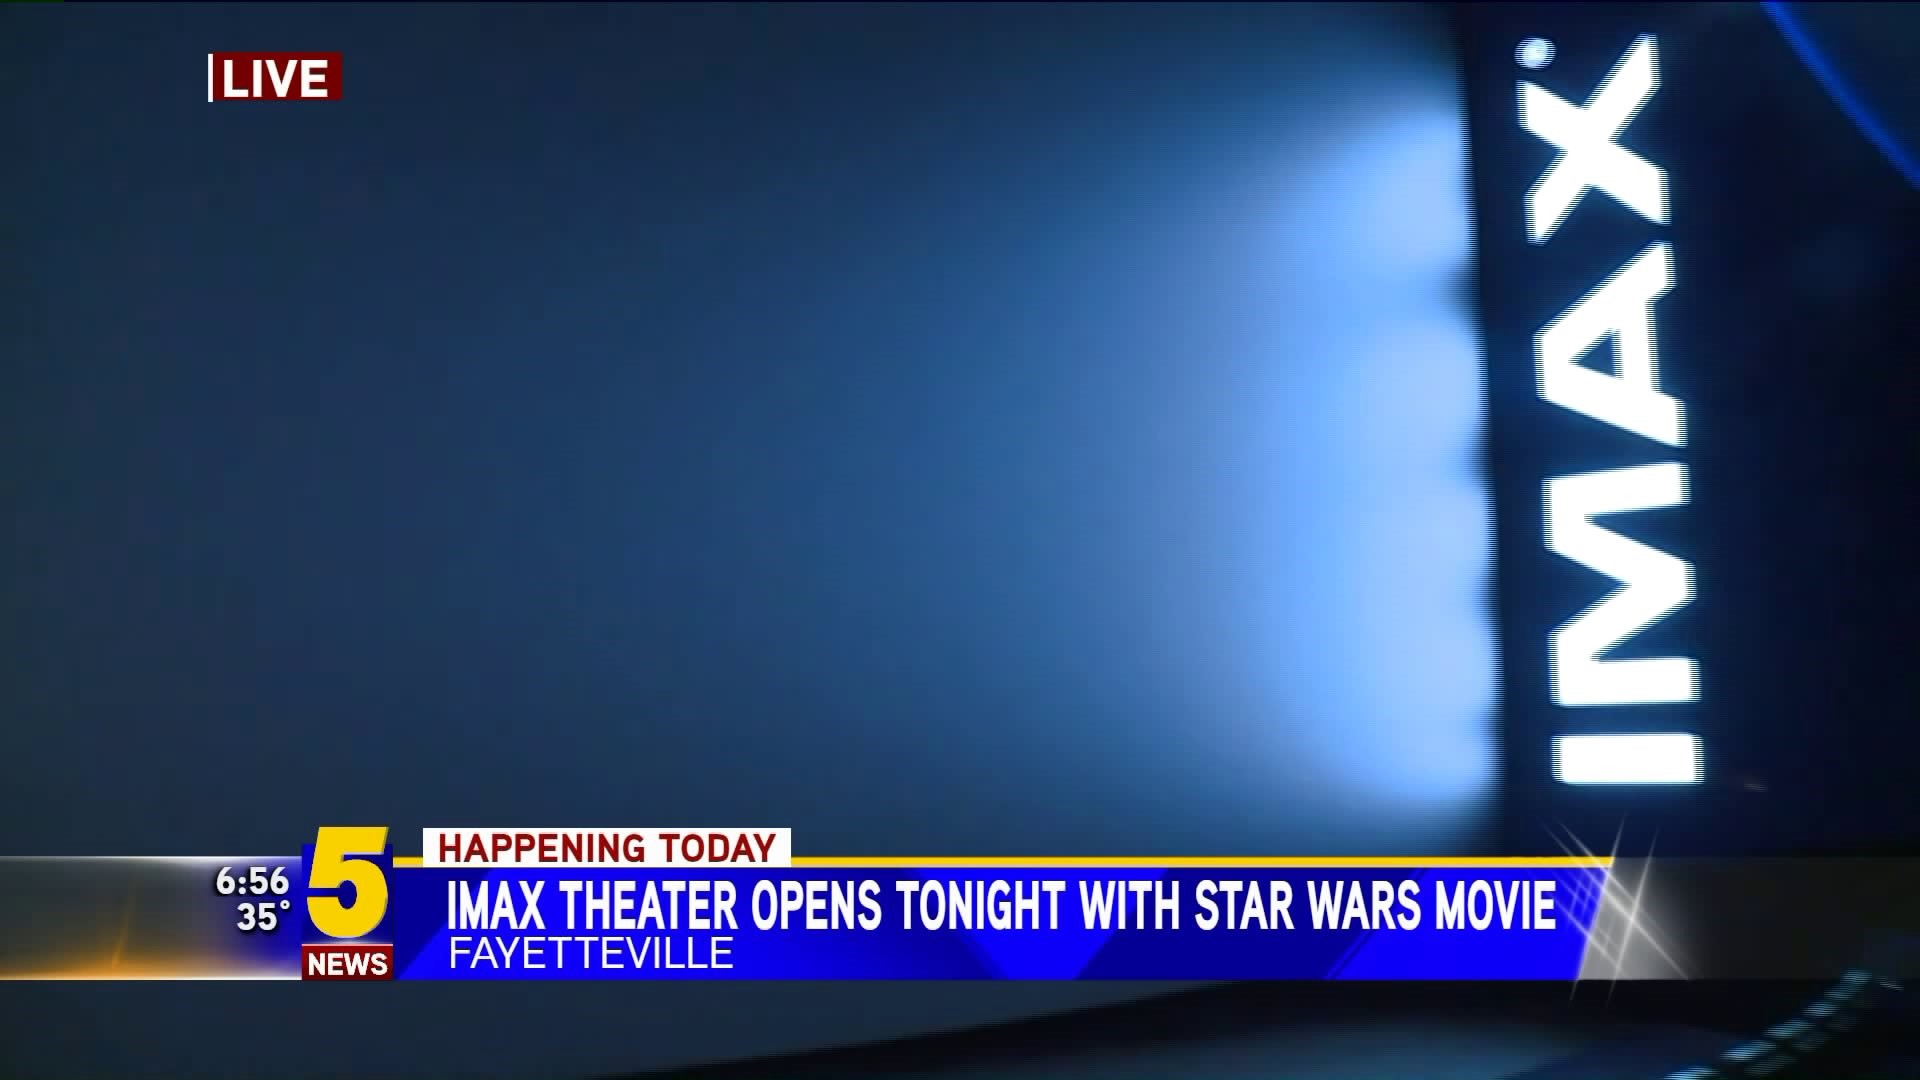 IMAX OPENS